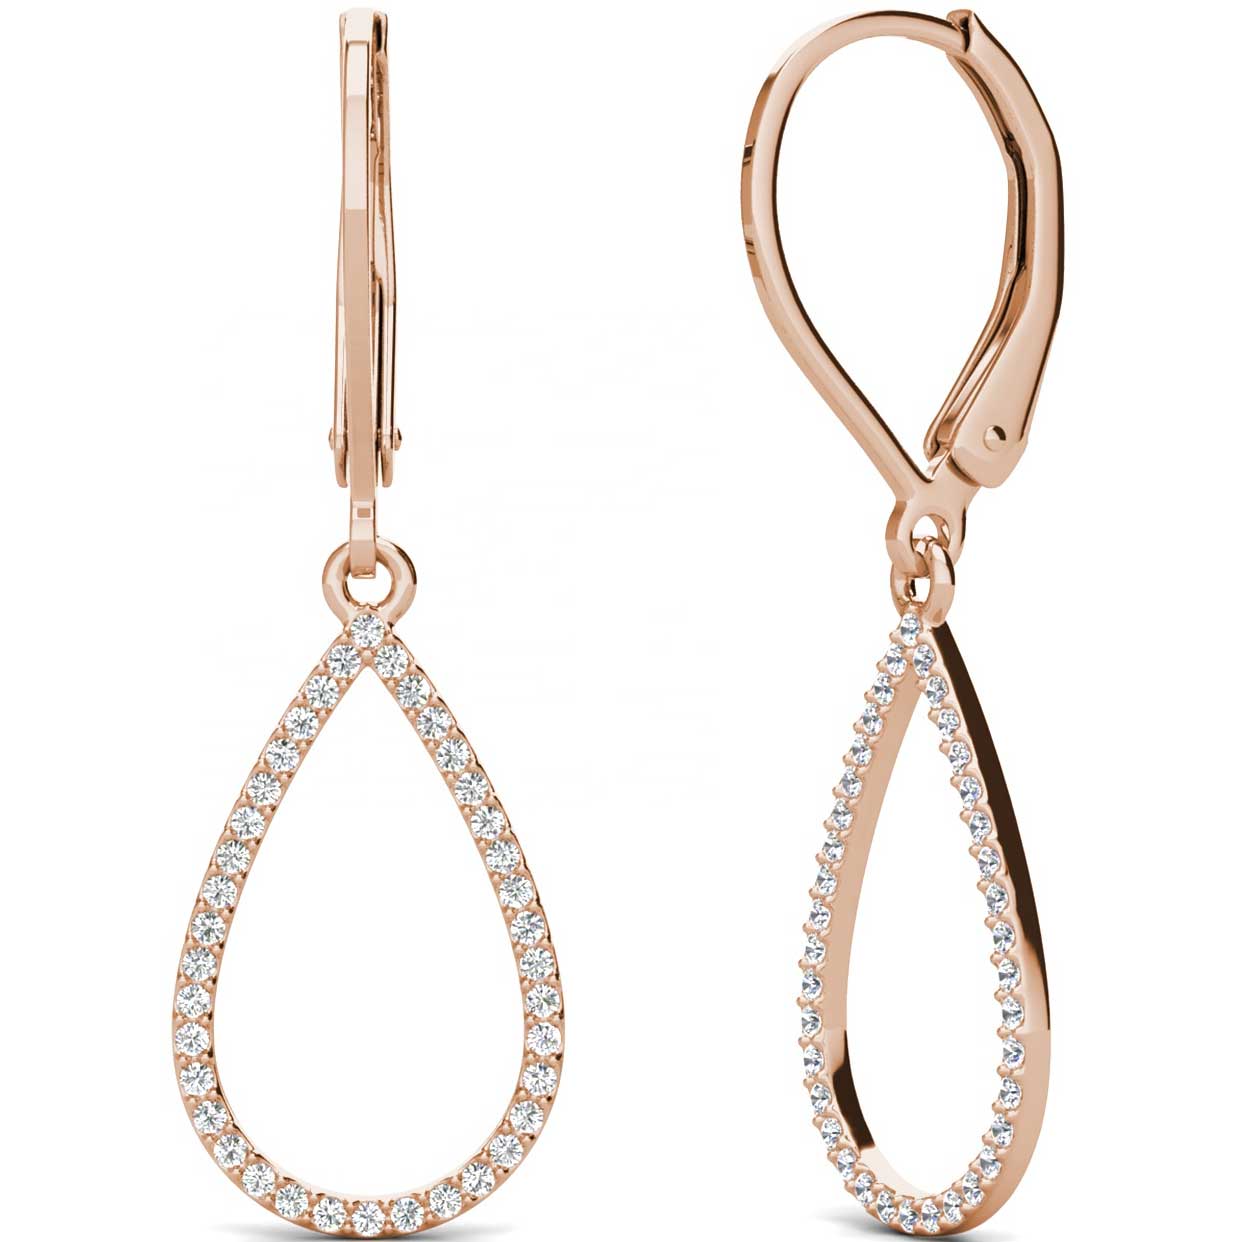 rose gold crystal drop earrings for women gift